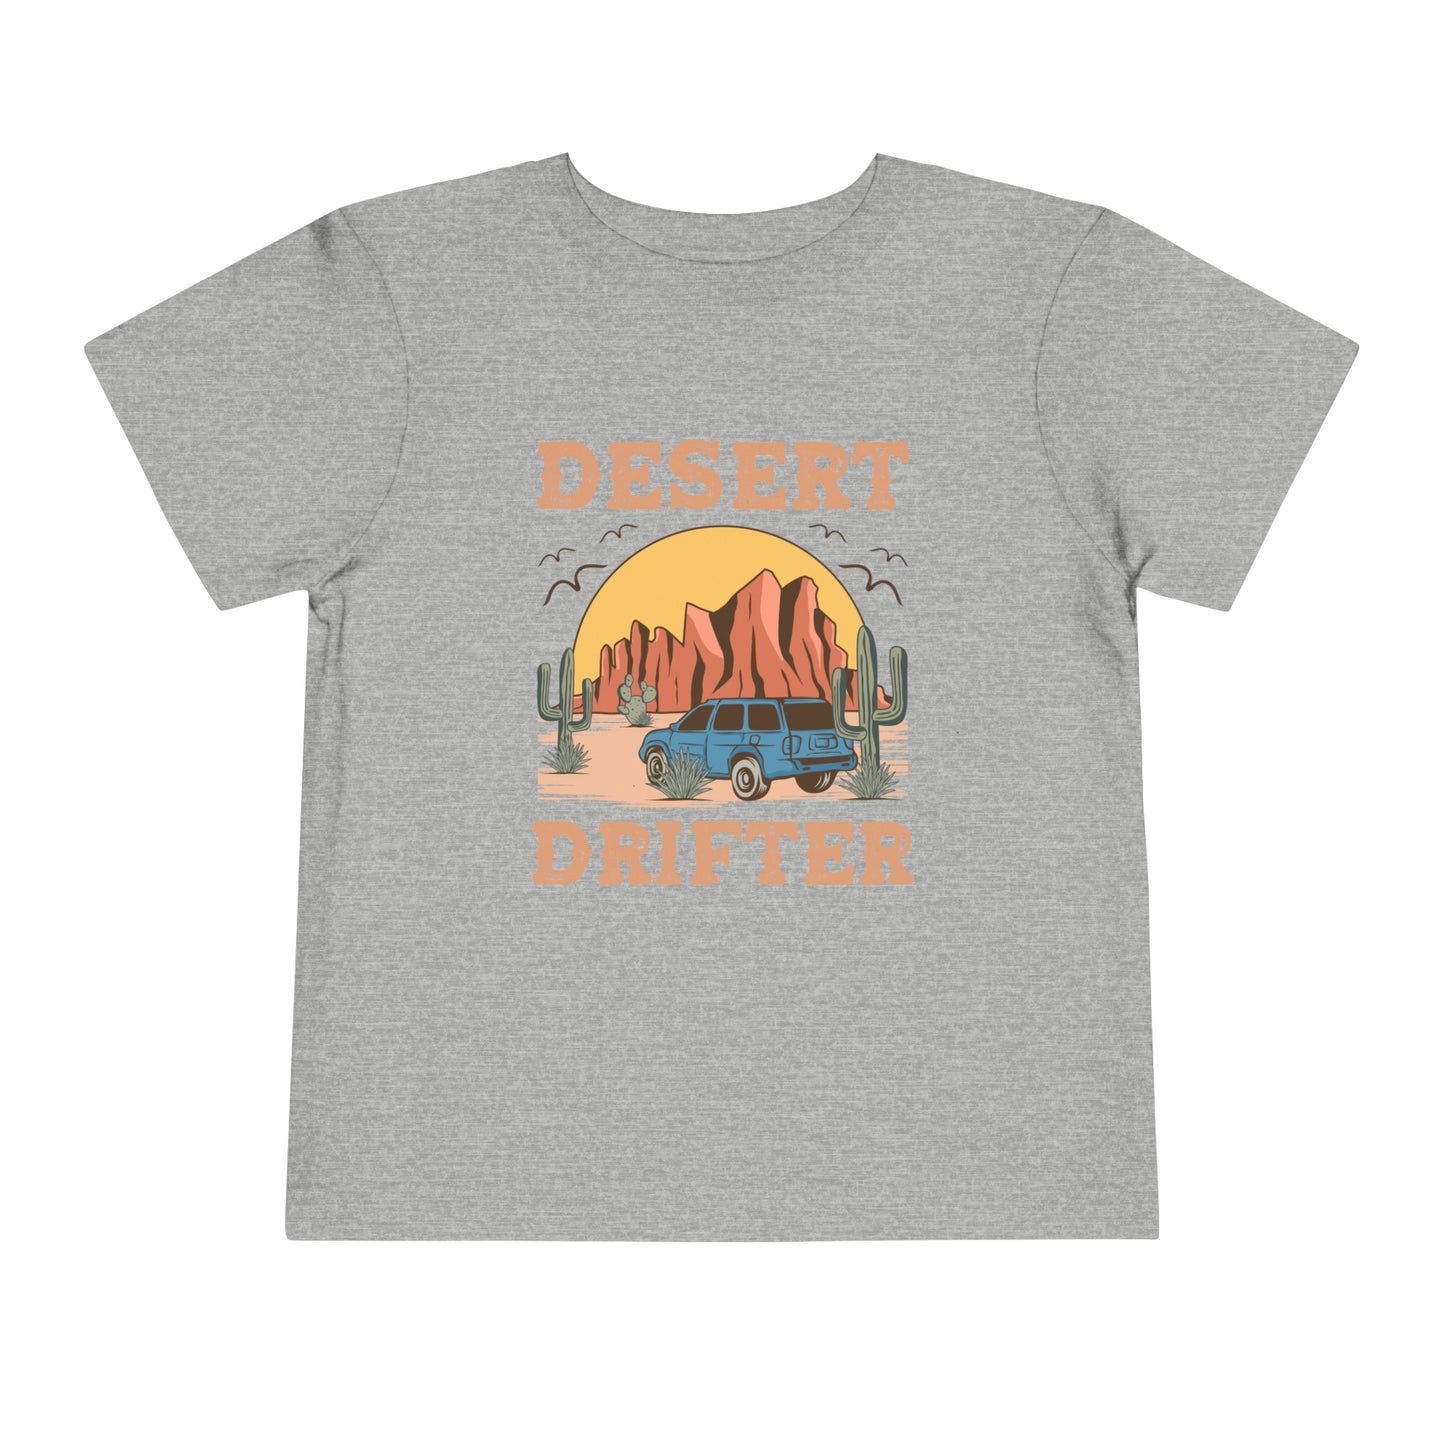 Desert Drifter Toddler T-Shirt | Retro Western Toddler Tee